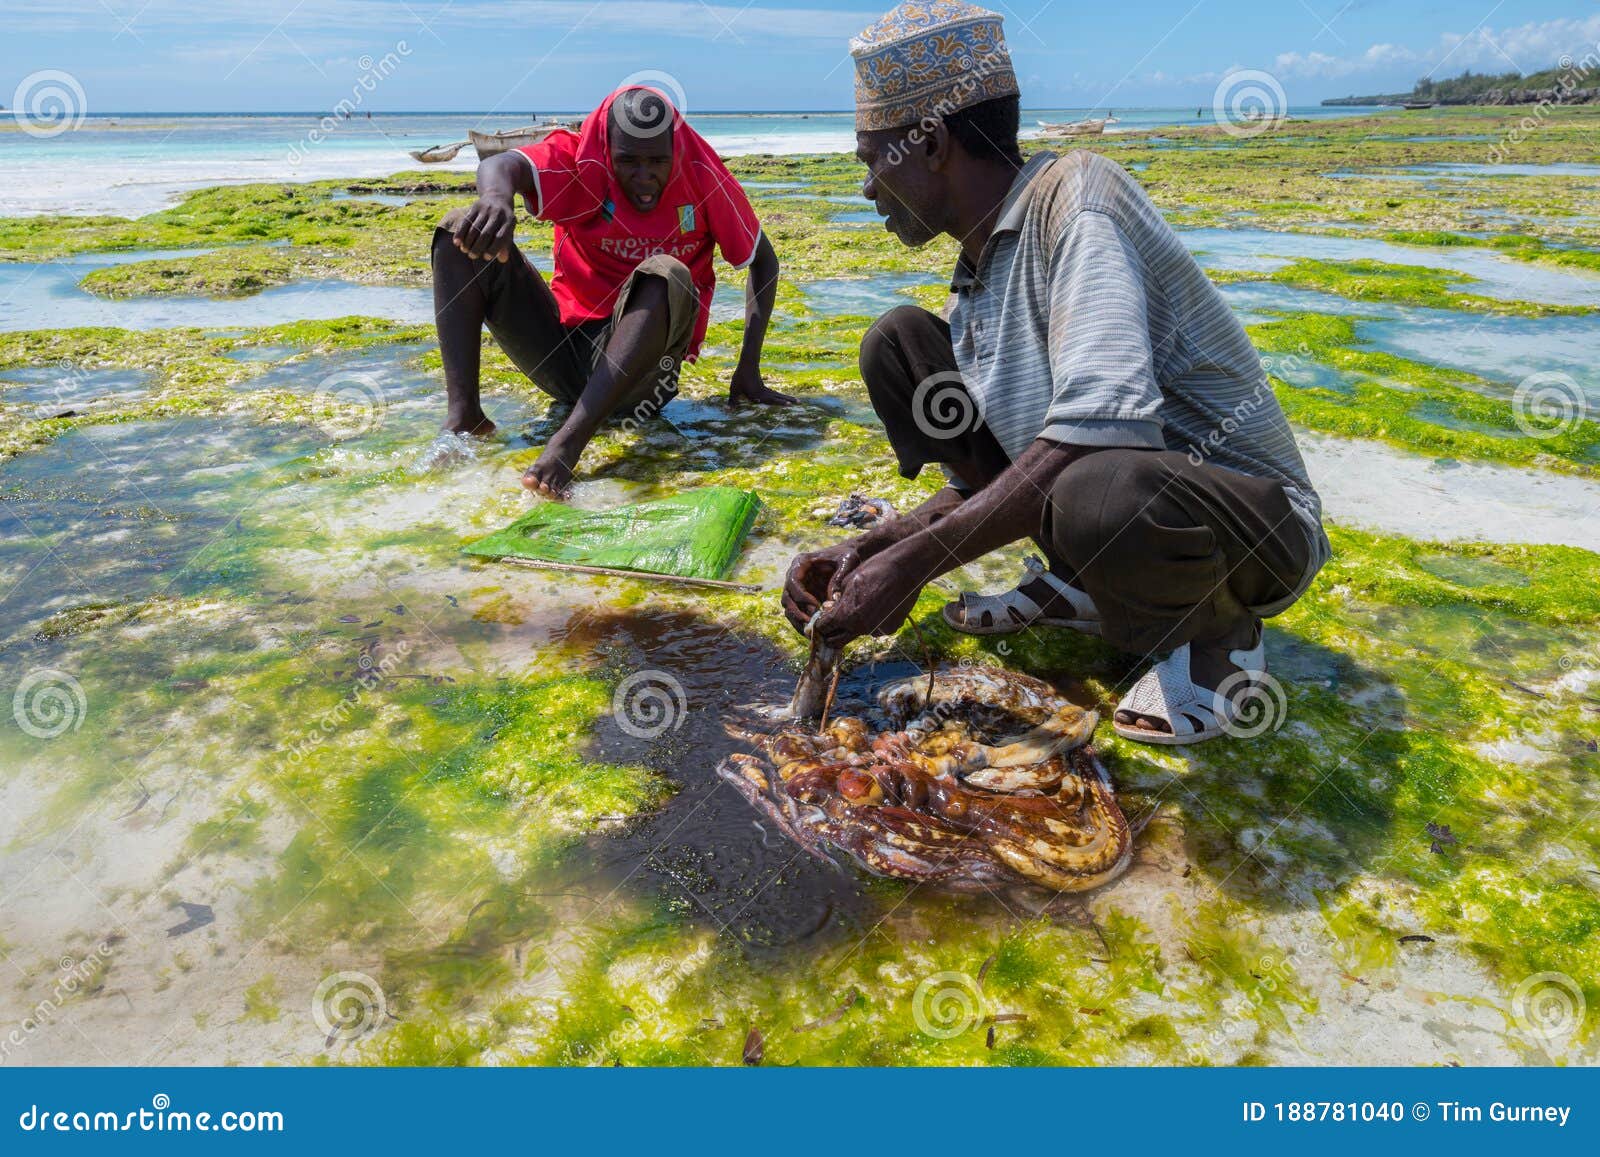 https://thumbs.dreamstime.com/z/zanzibar-tanzania-september-octopus-fishermen-east-coast-zanzibar-octopus-fishing-eastern-coast-zanzibar-188781040.jpg